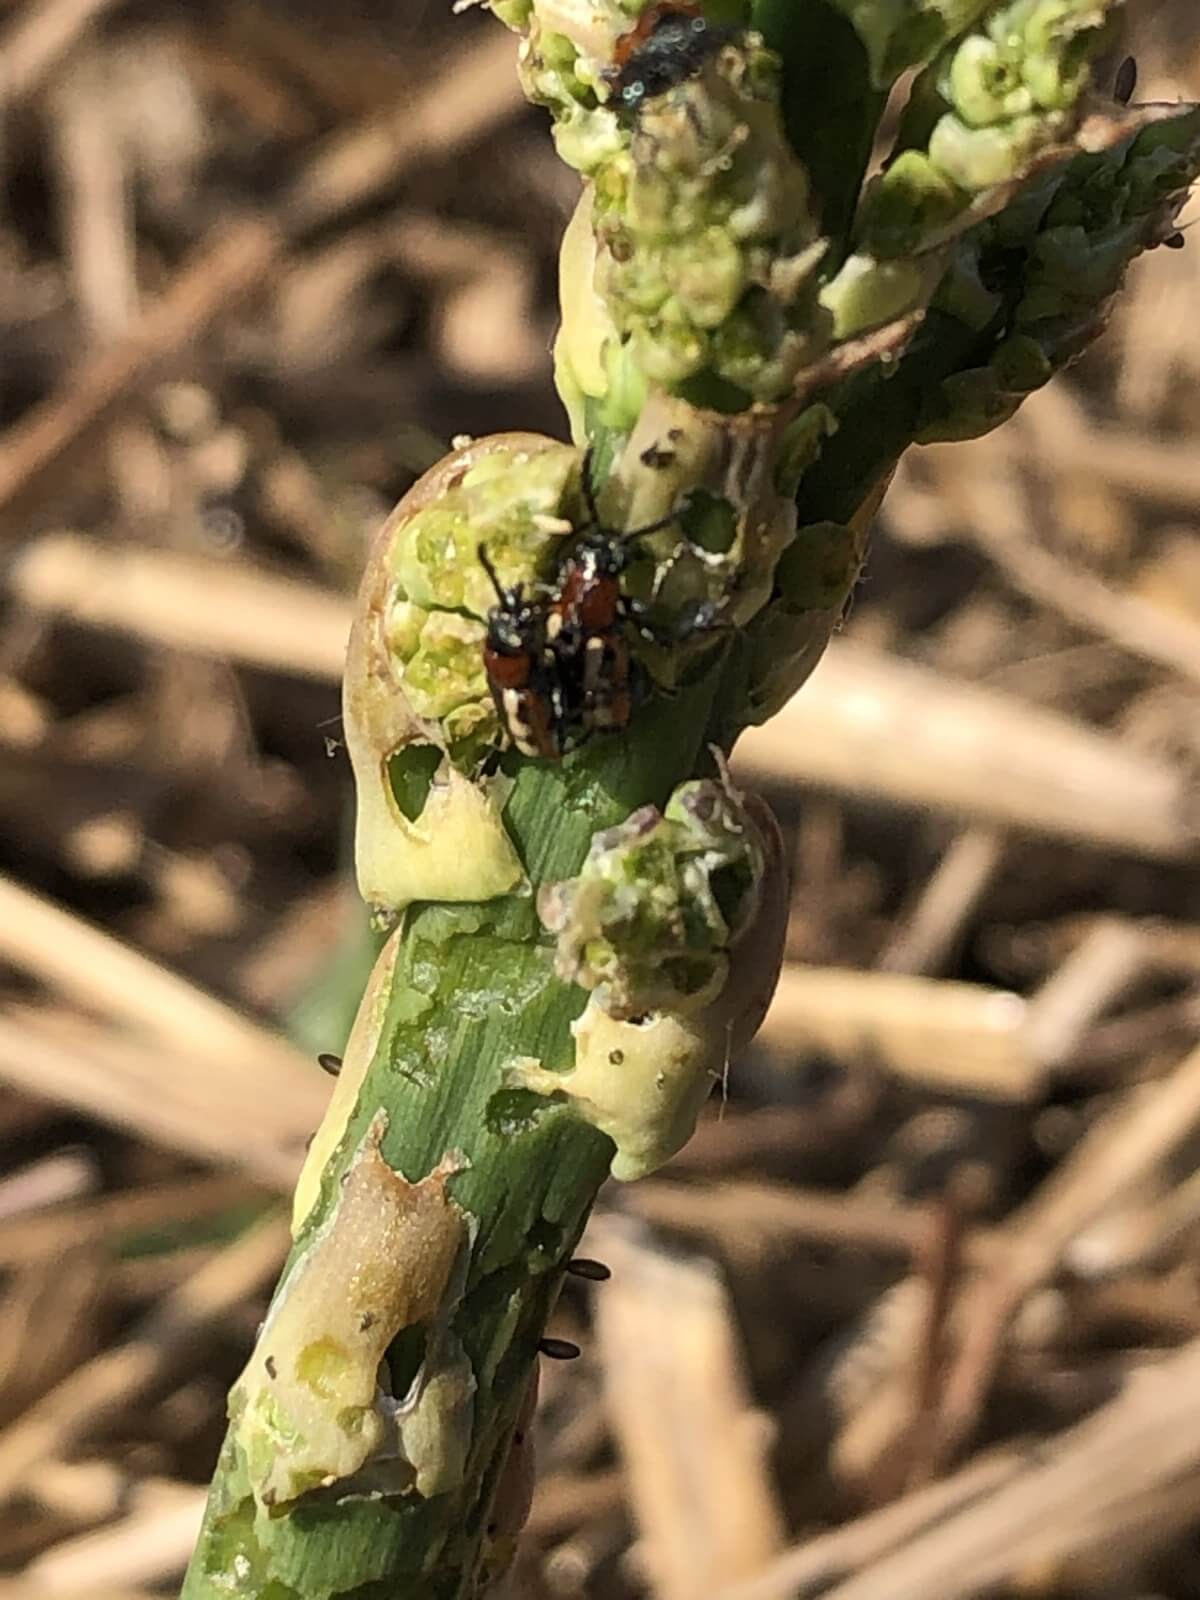 breeding asparagus beetles and plant damage